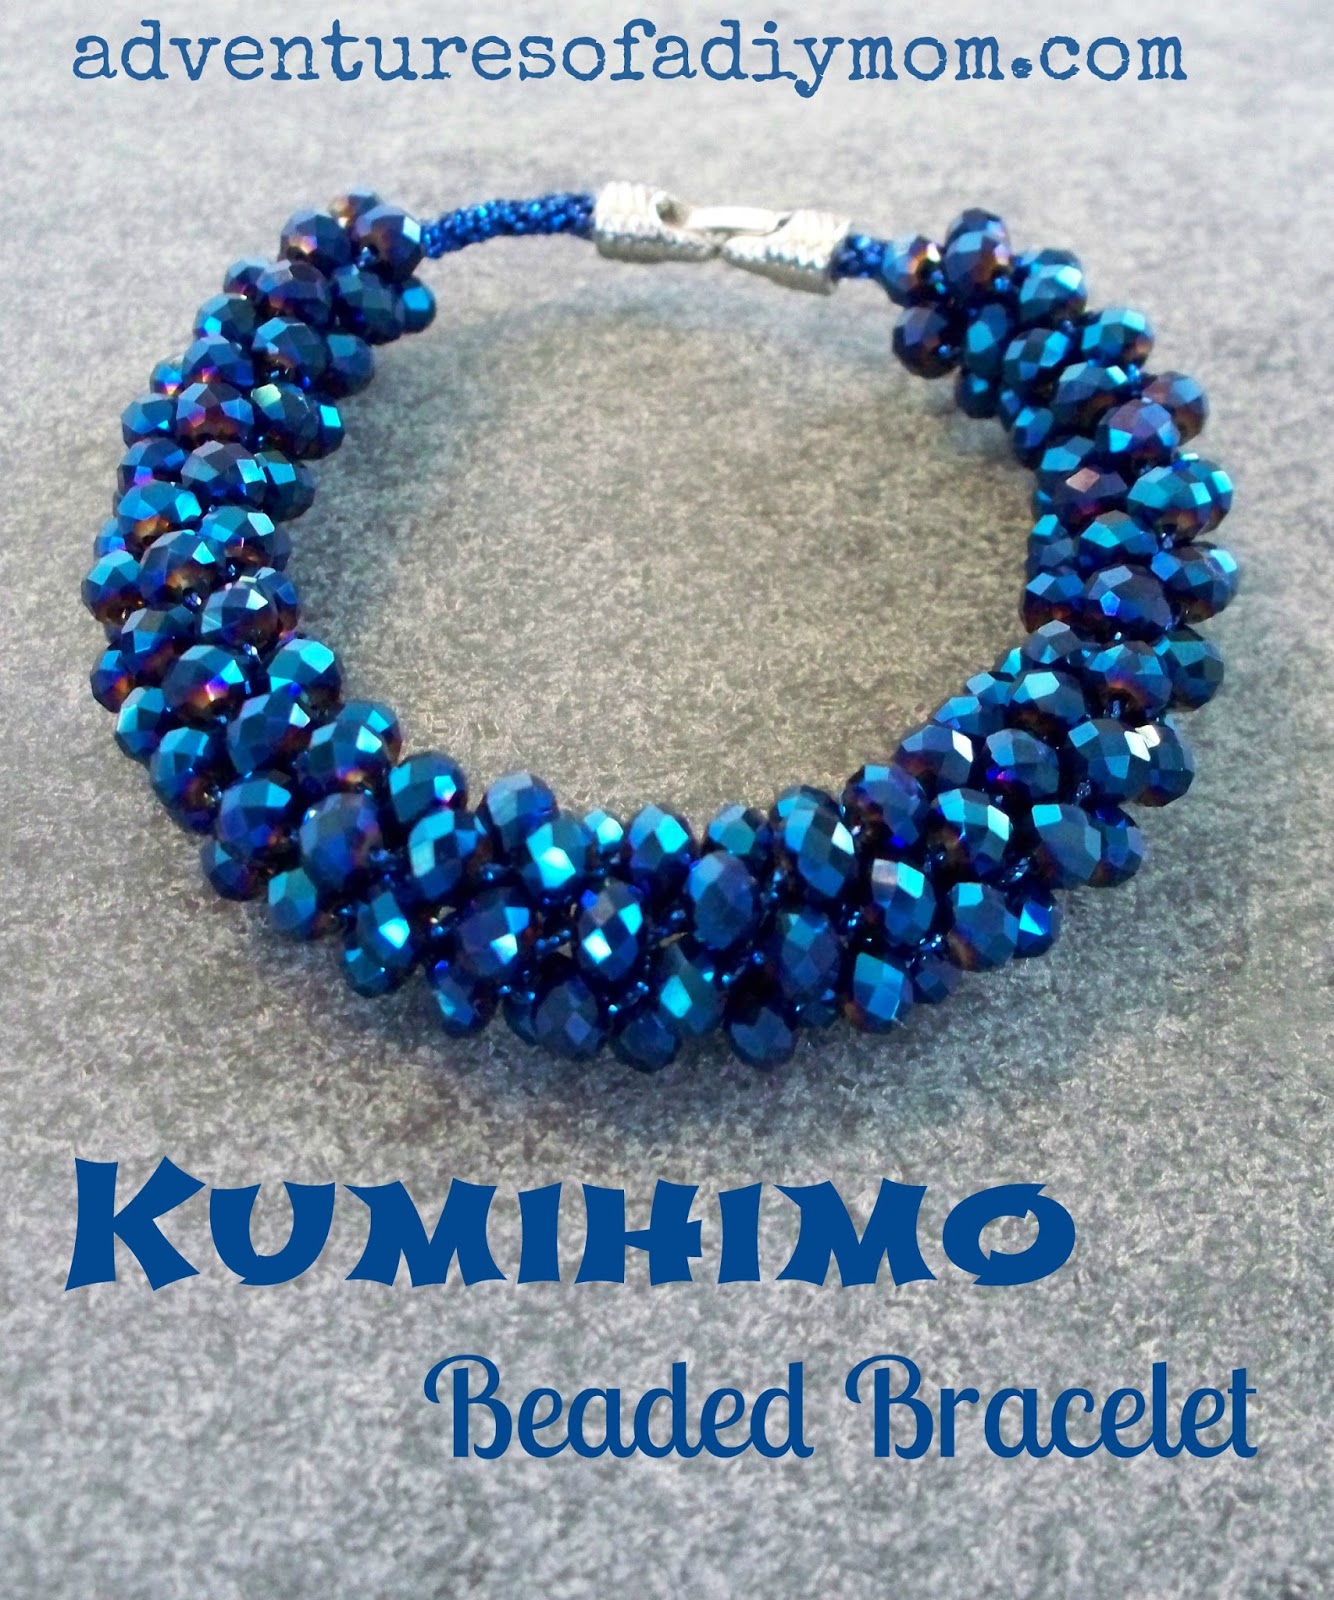 Beaded Pura Vida Friendship Bracelet | Woven Braided Bracelet | Adjustable Wax Cord | String Waterproof | Silver Gold Bronze Beads